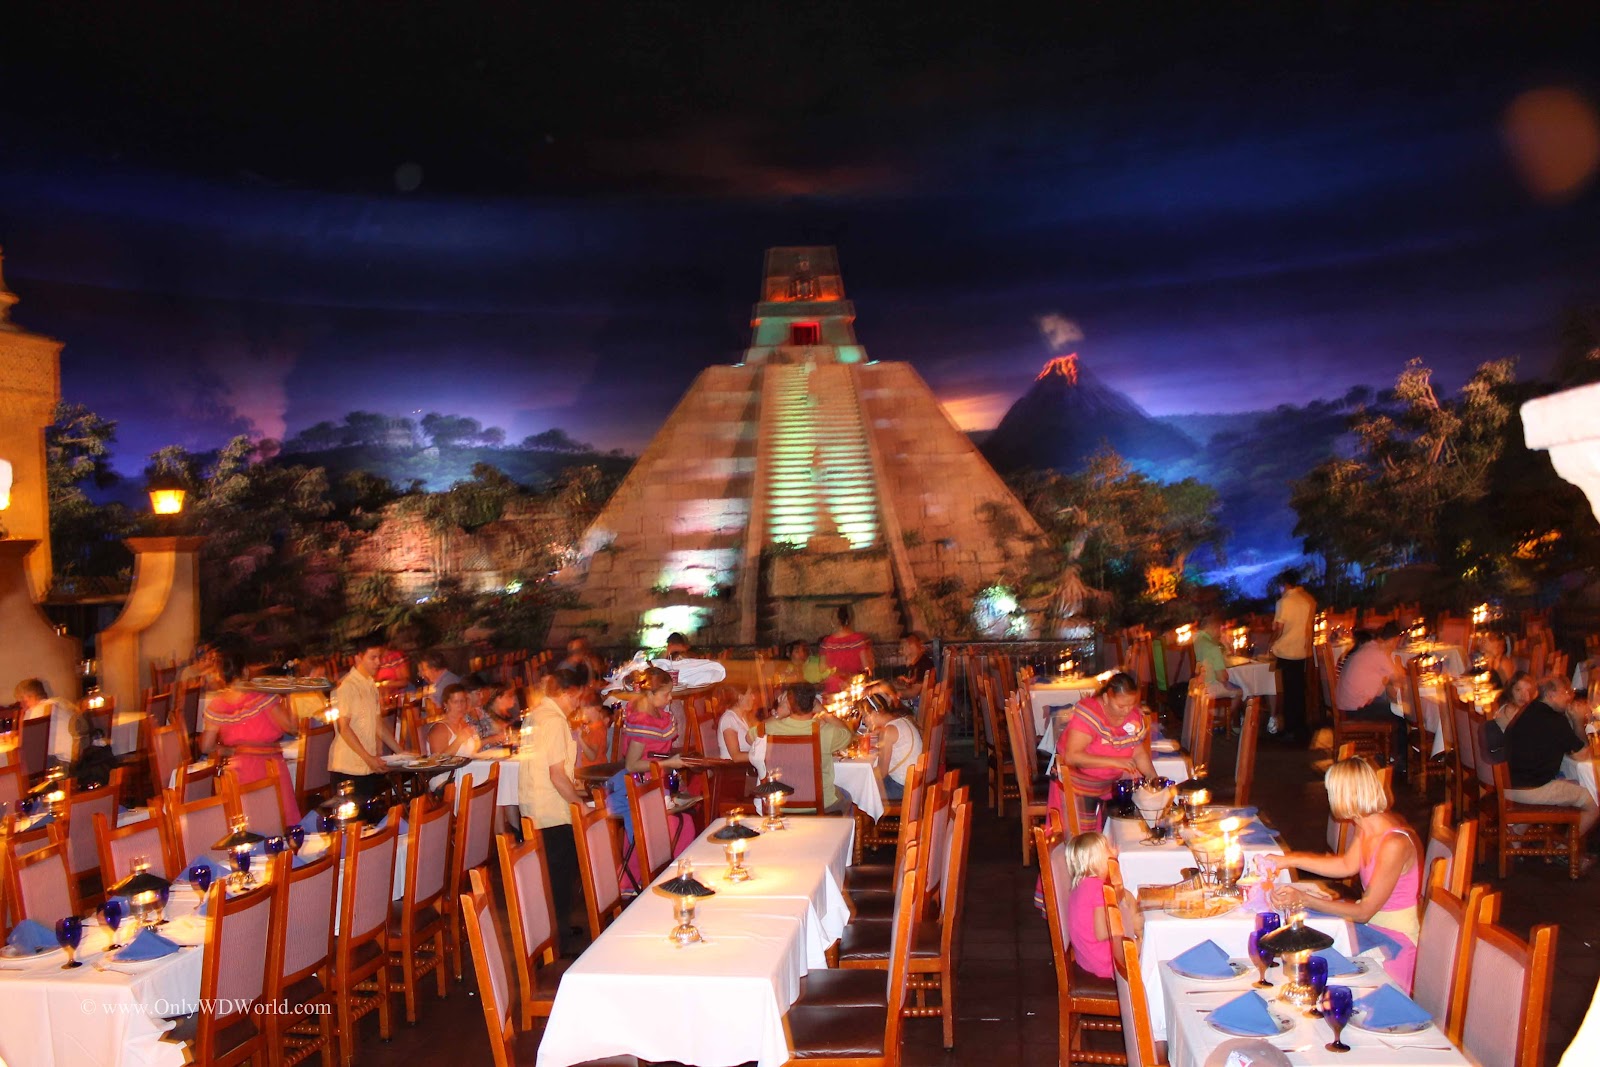 Aztec Pyramid Rules The Skyline of Epcot Mexico Pavilion | Disney World